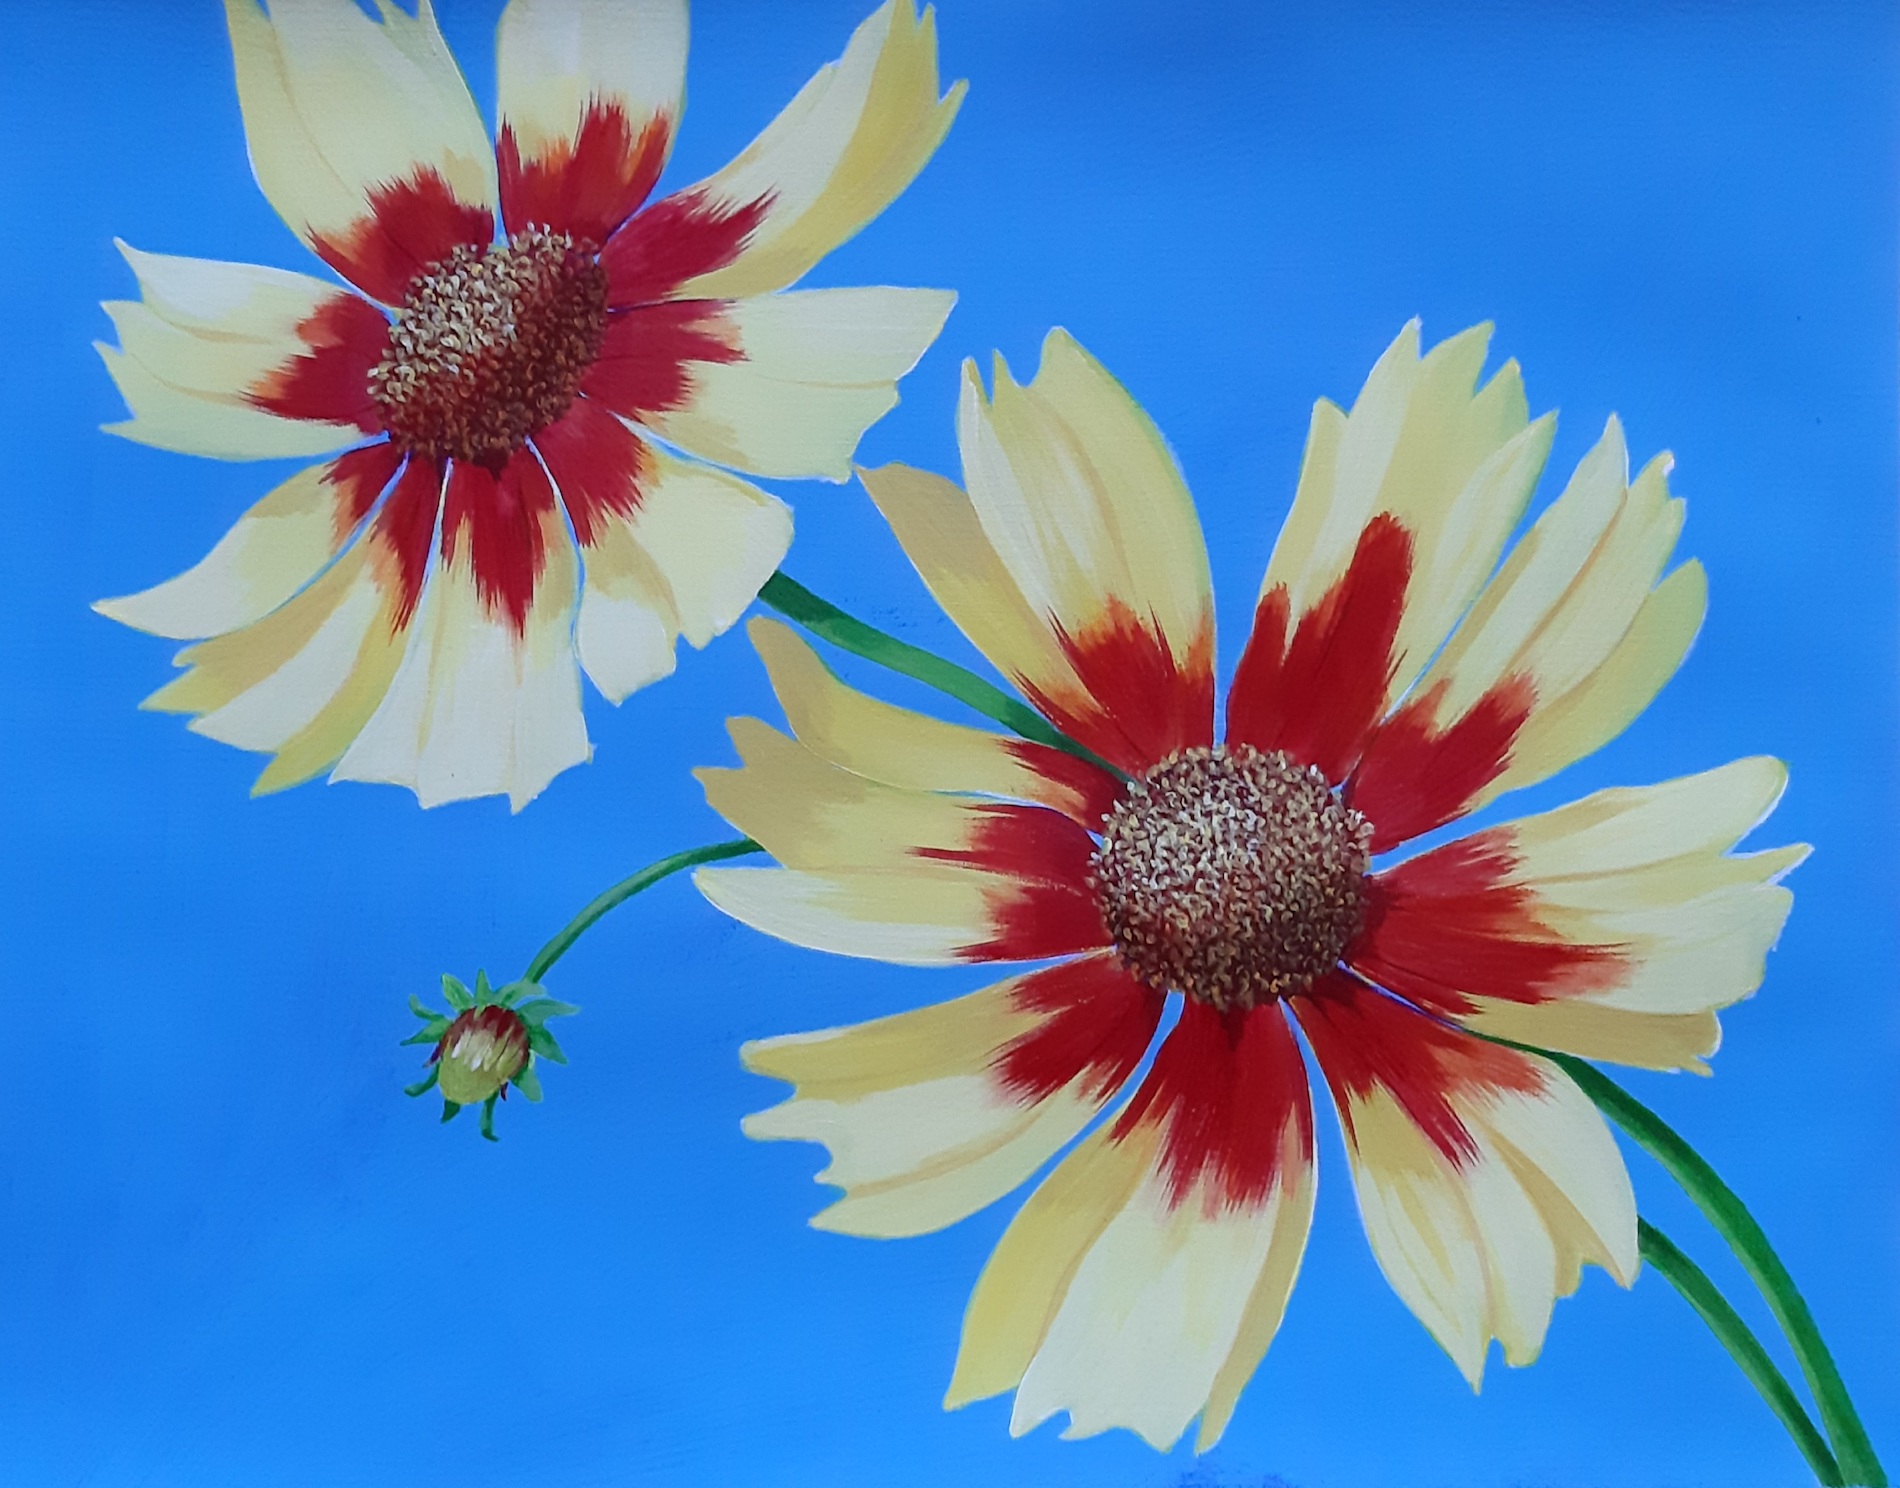 Gaillardia aristata (Blanket flower) - acrylic on paper - 16" x 20"